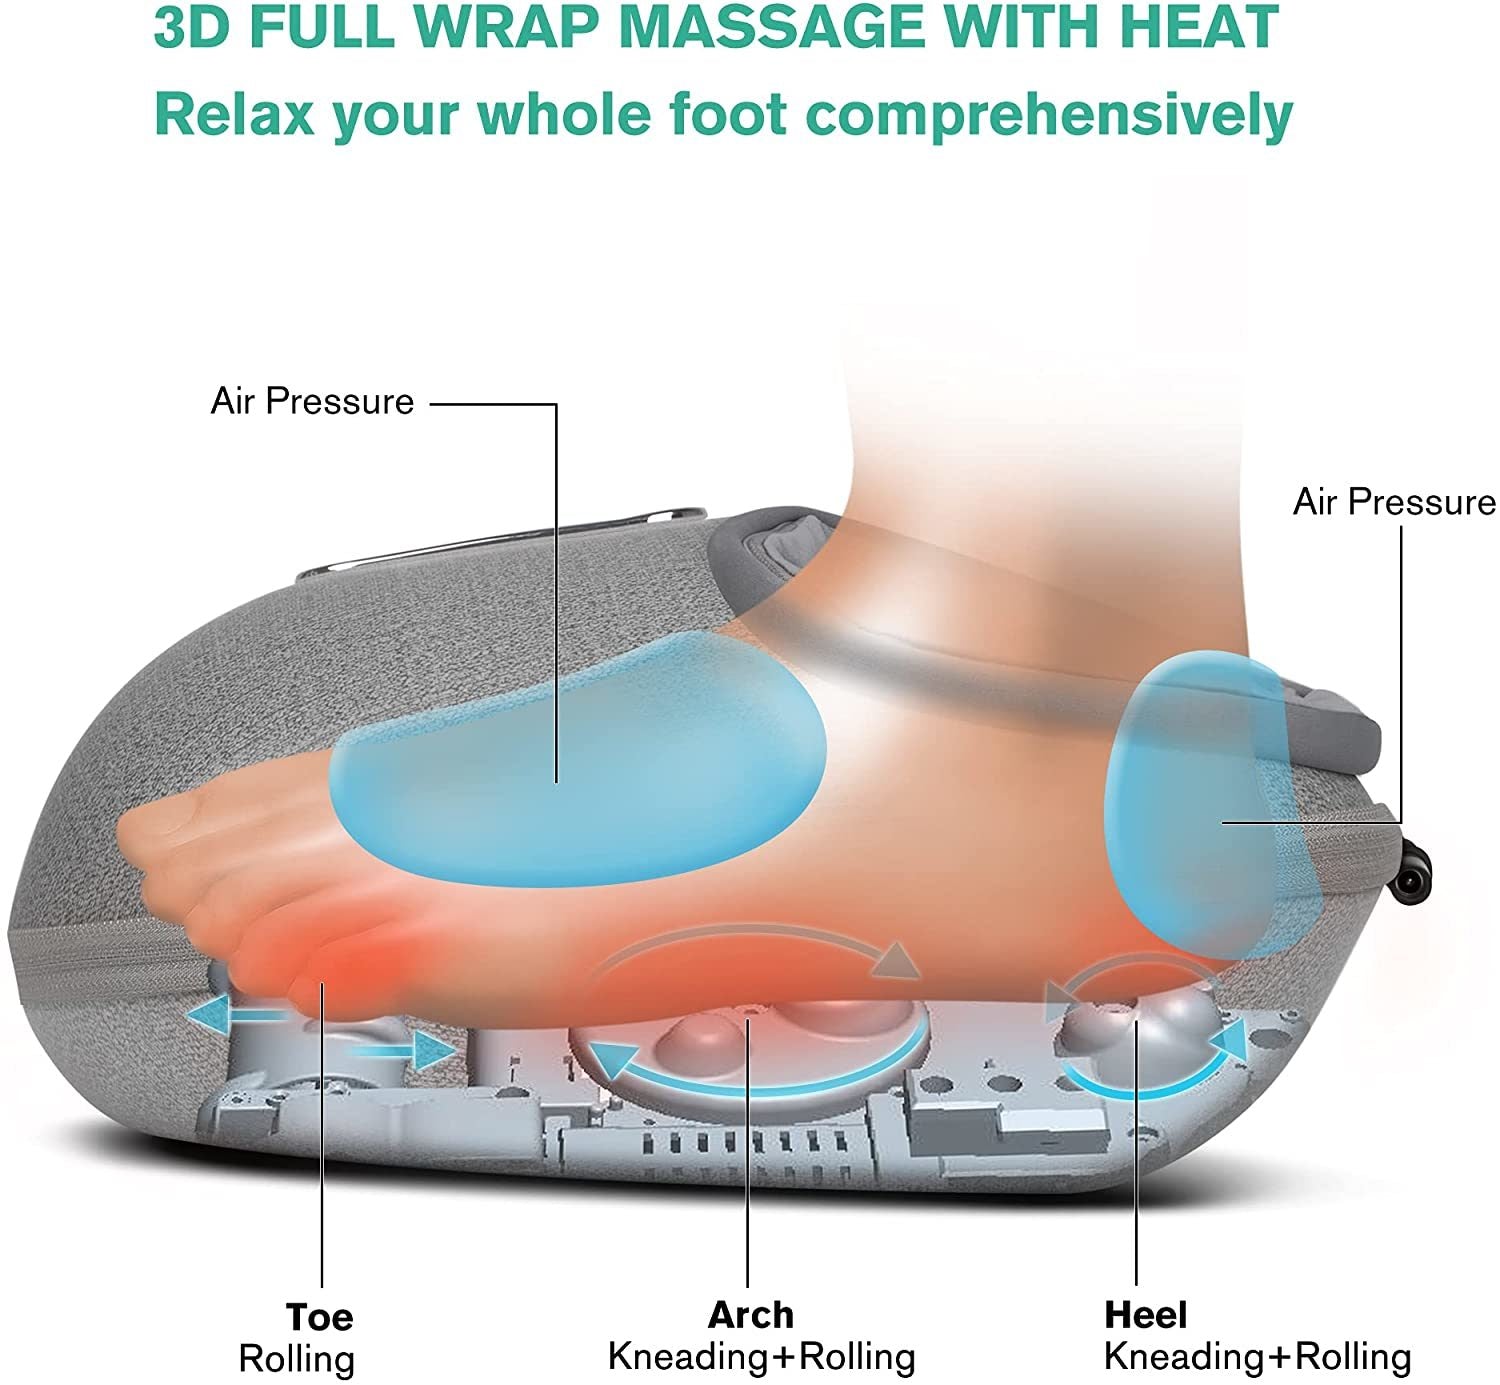 Shiatsu Foot Massager: Heat, Deep Kneading, Multi-Level Pressure Settings